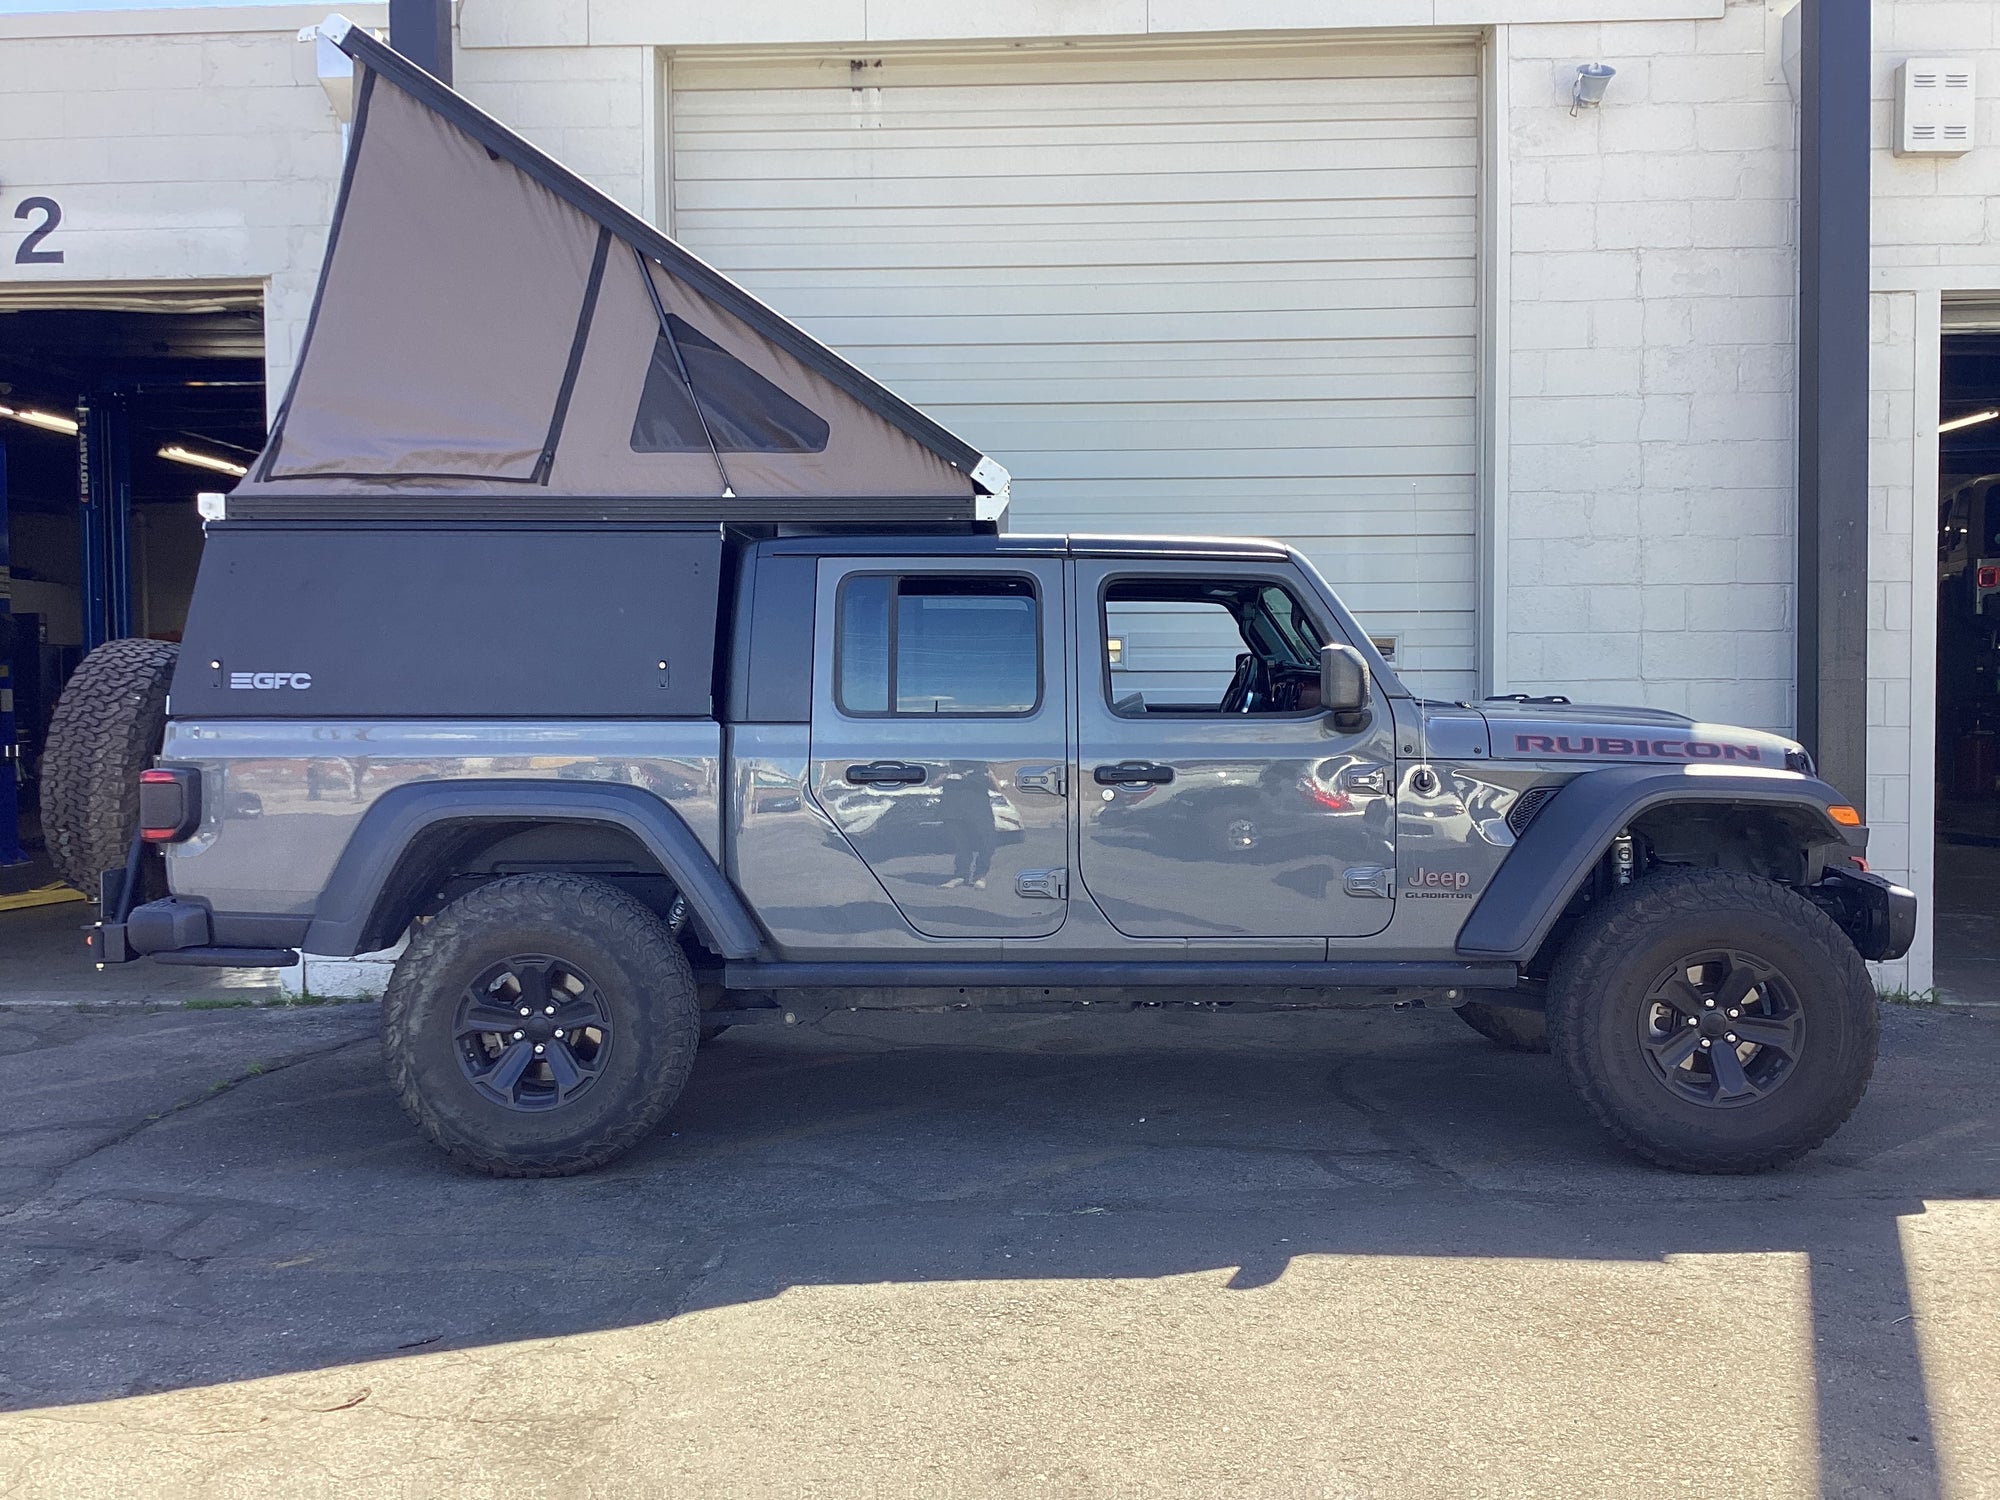 2020 Jeep Gladiator Camper - Build #4836